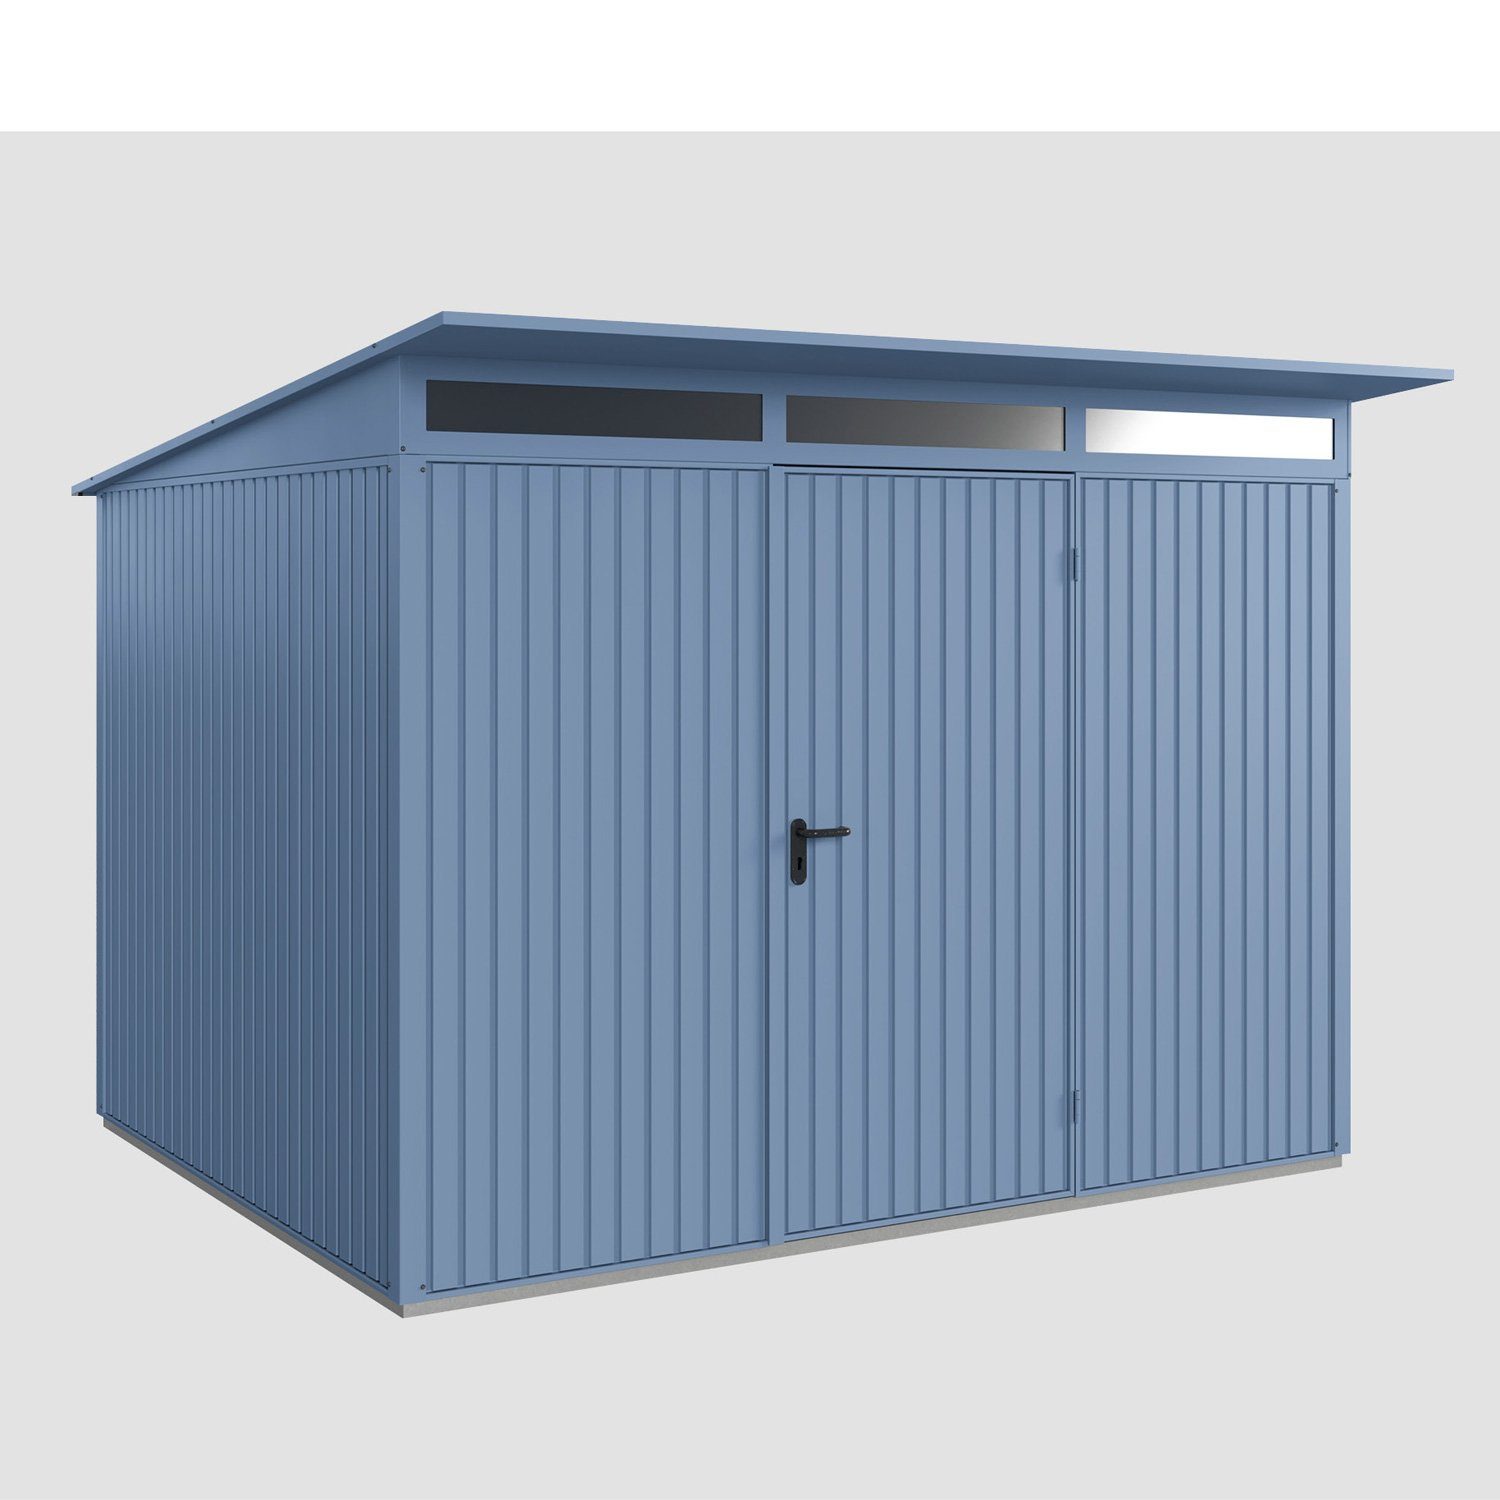 Hörmann Ecostar Pultdach Trend Tür mit taubenblau Typ 1-flüglige Gerätehaus 3, Metall-Gerätehaus